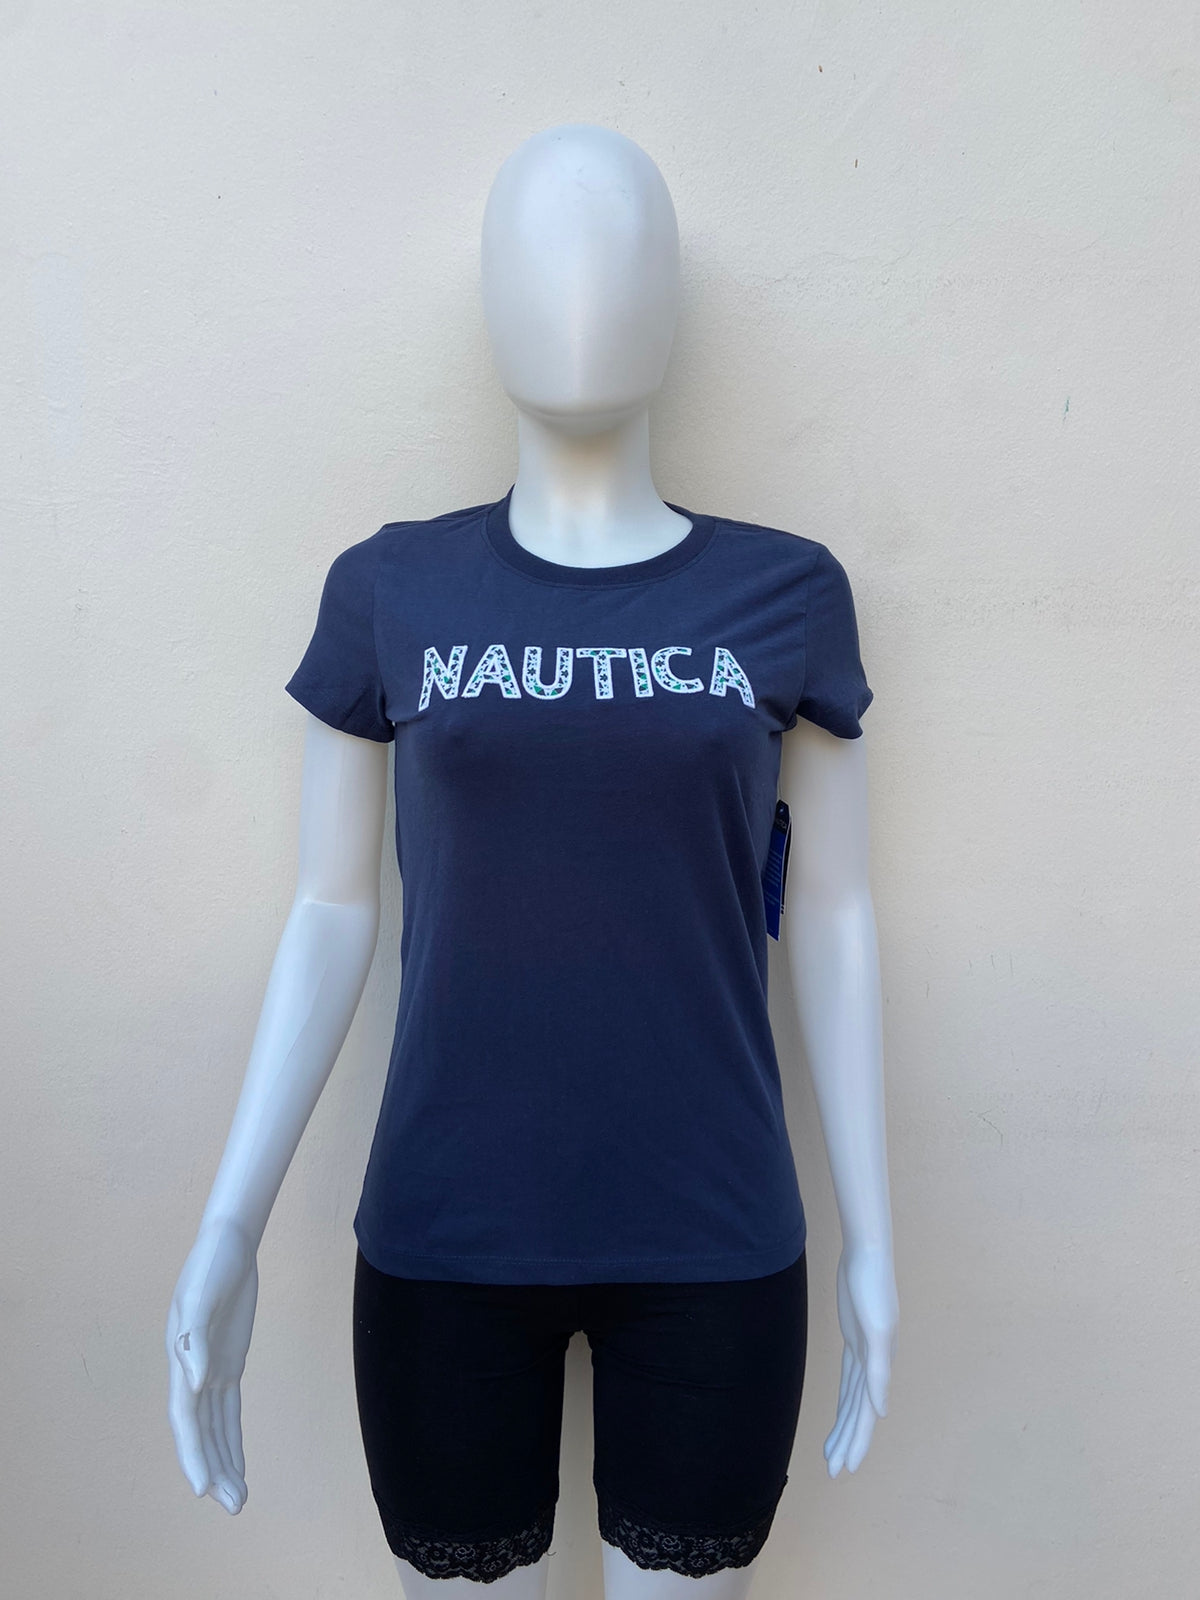 T-shirt NAUTICA original azul marino con letras NAUTICA con diseños de color verde dentro.